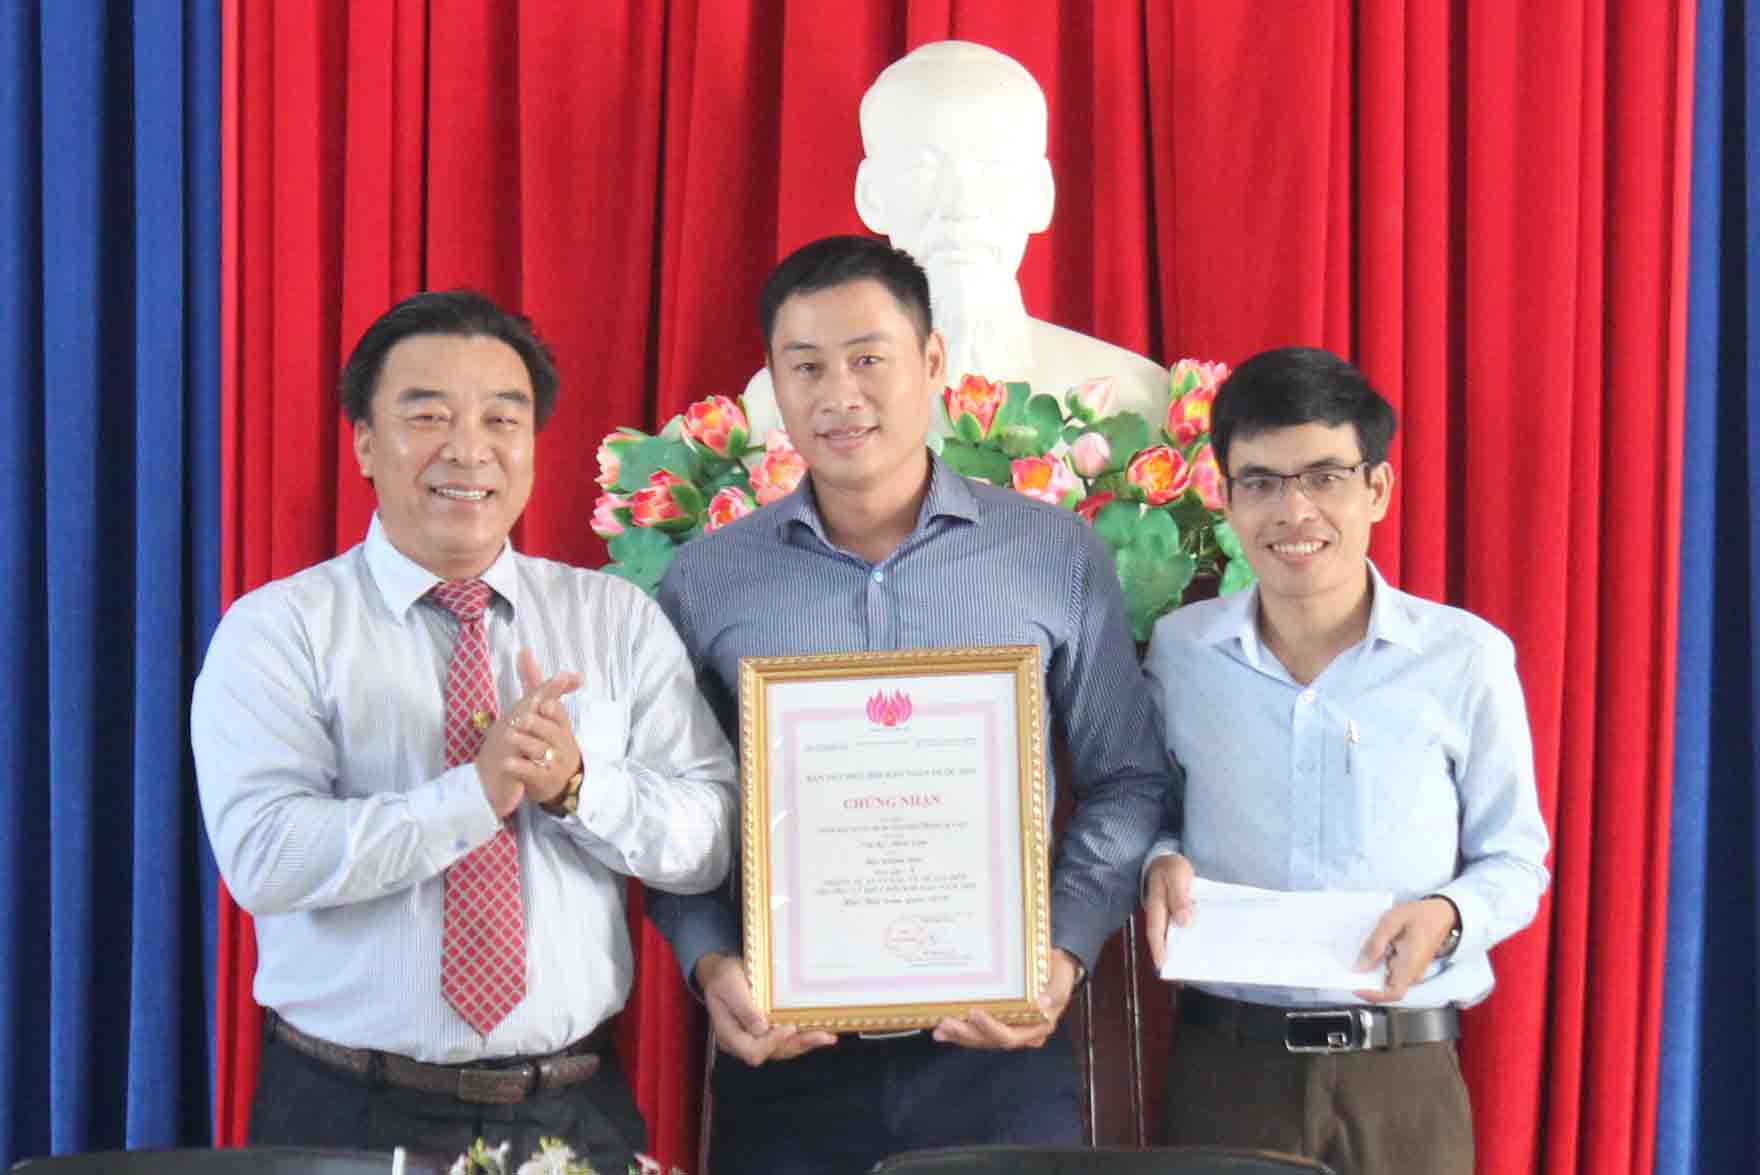 Khanh Hoa Newspaper awarded Prize A at National Press Festival 2019